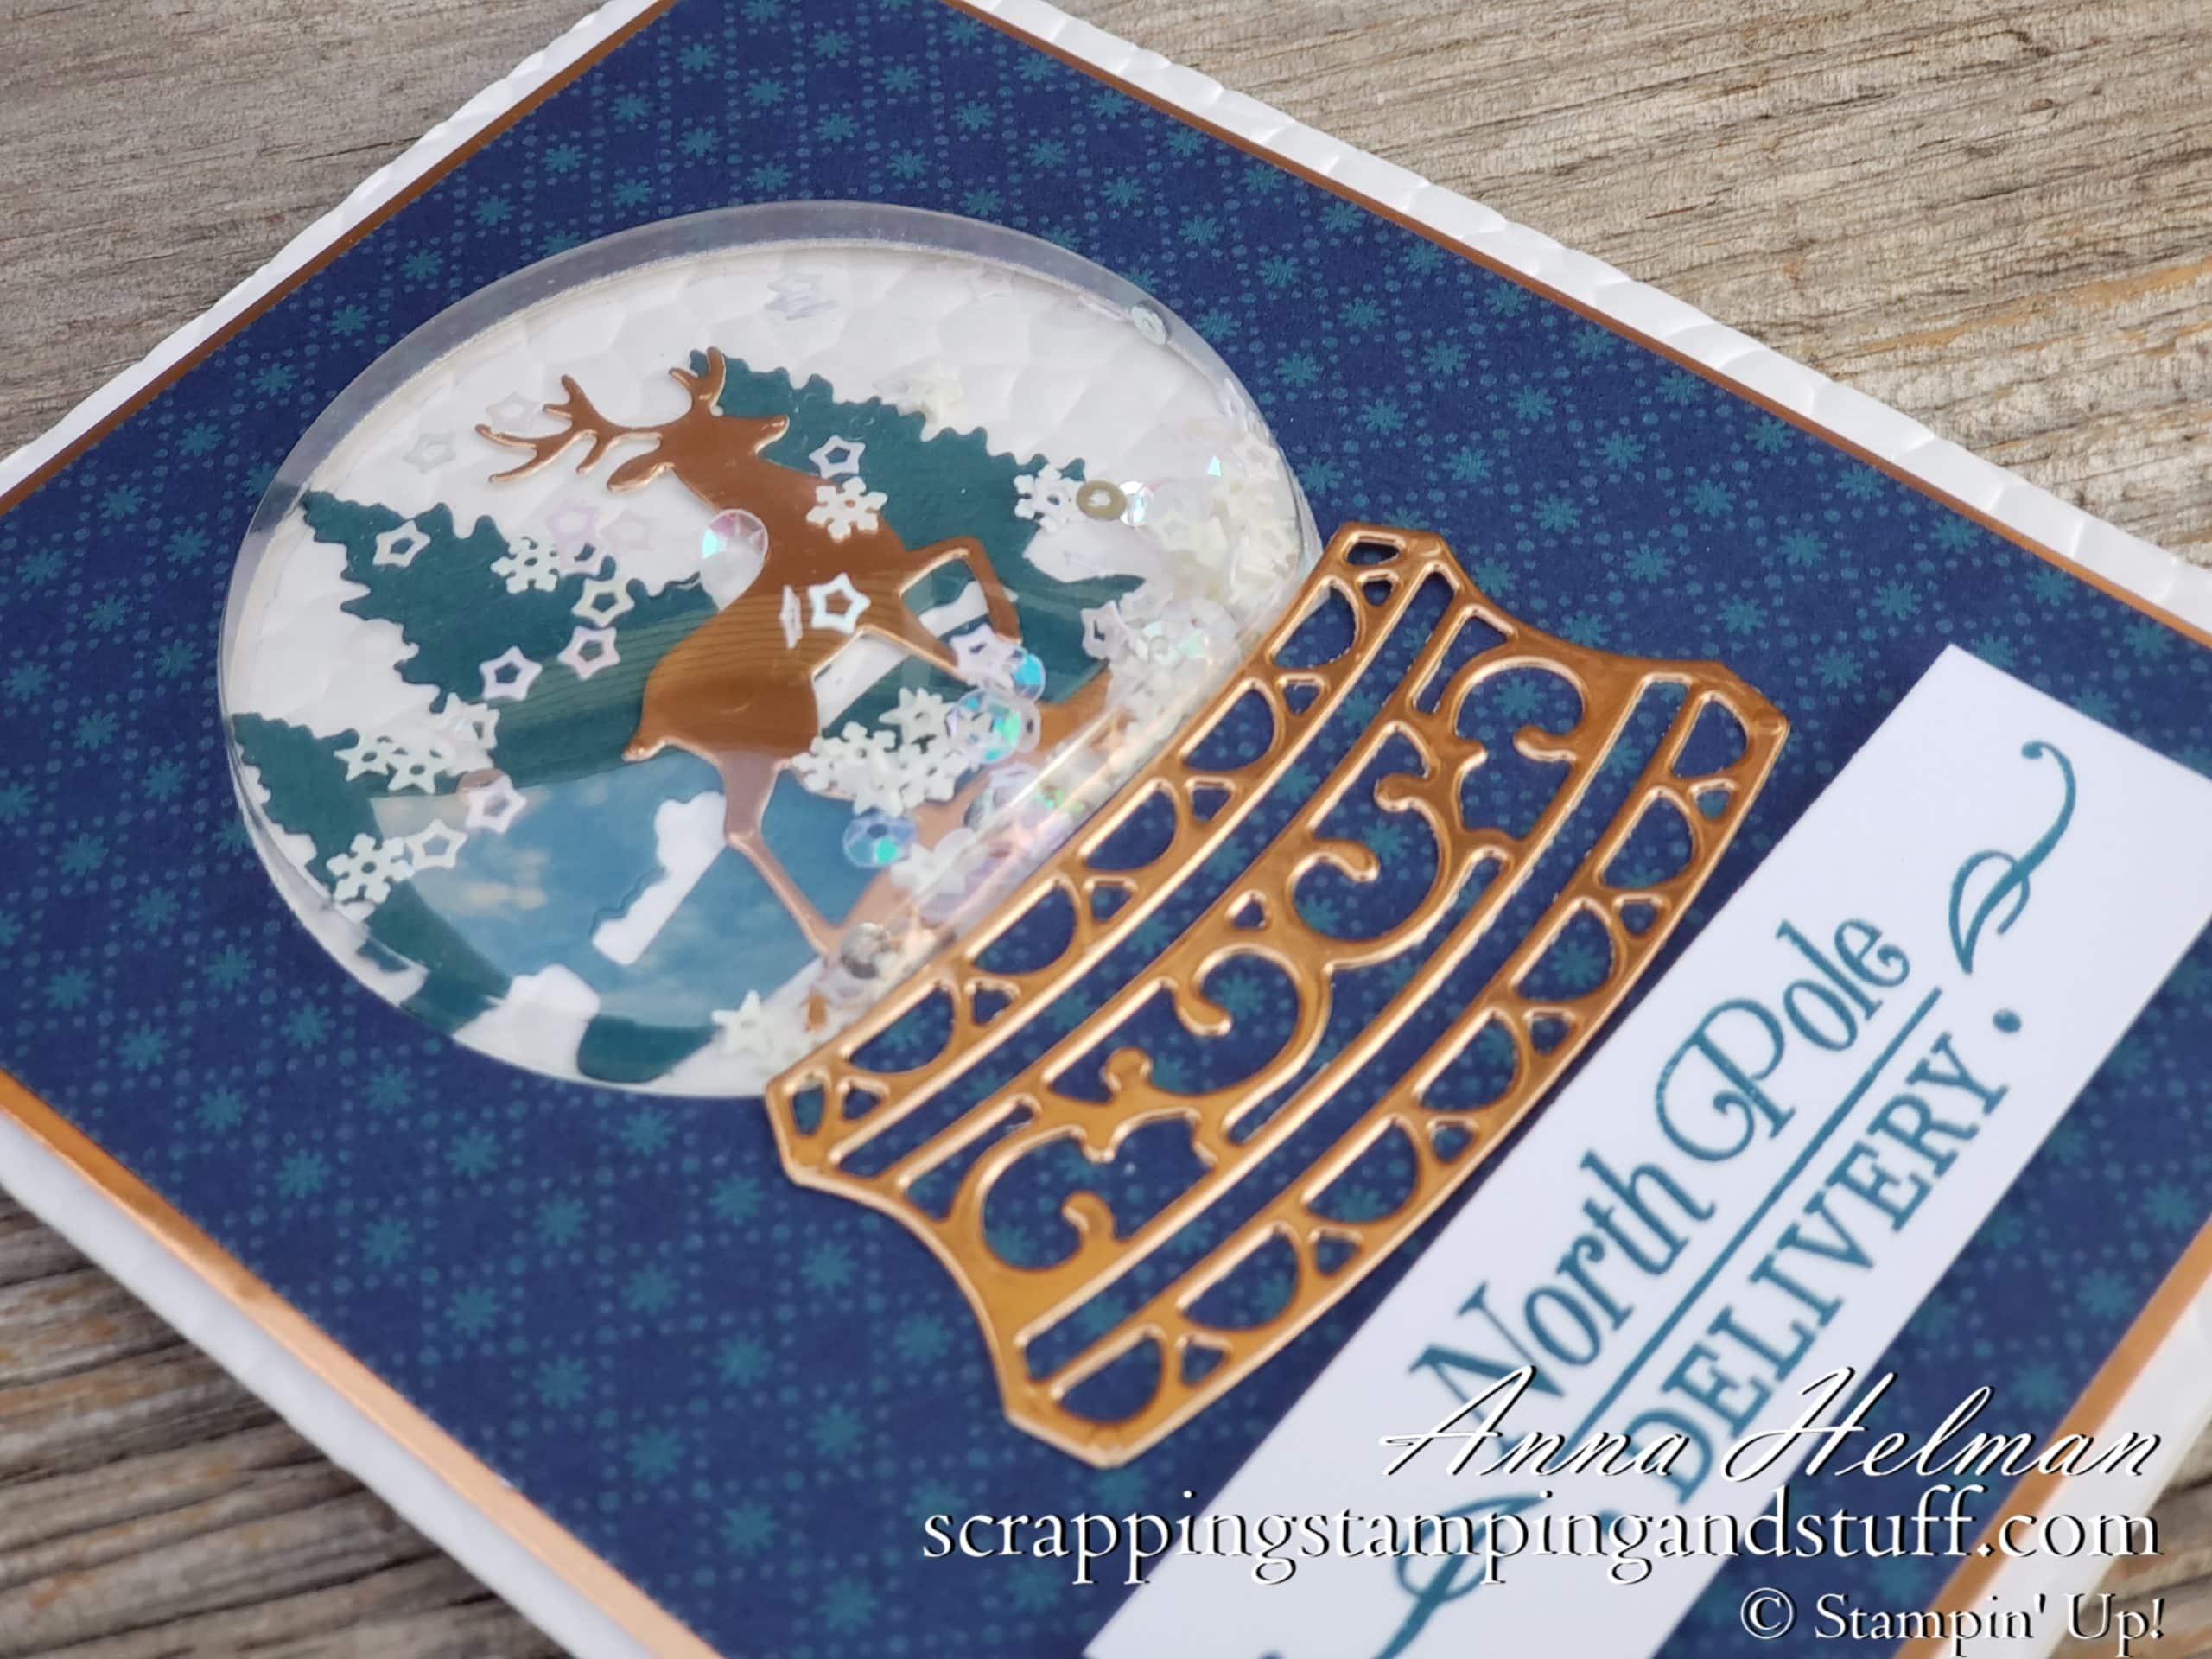 Stampin Up Snow Globe Scenes Holiday Catalog Sneak Peek!